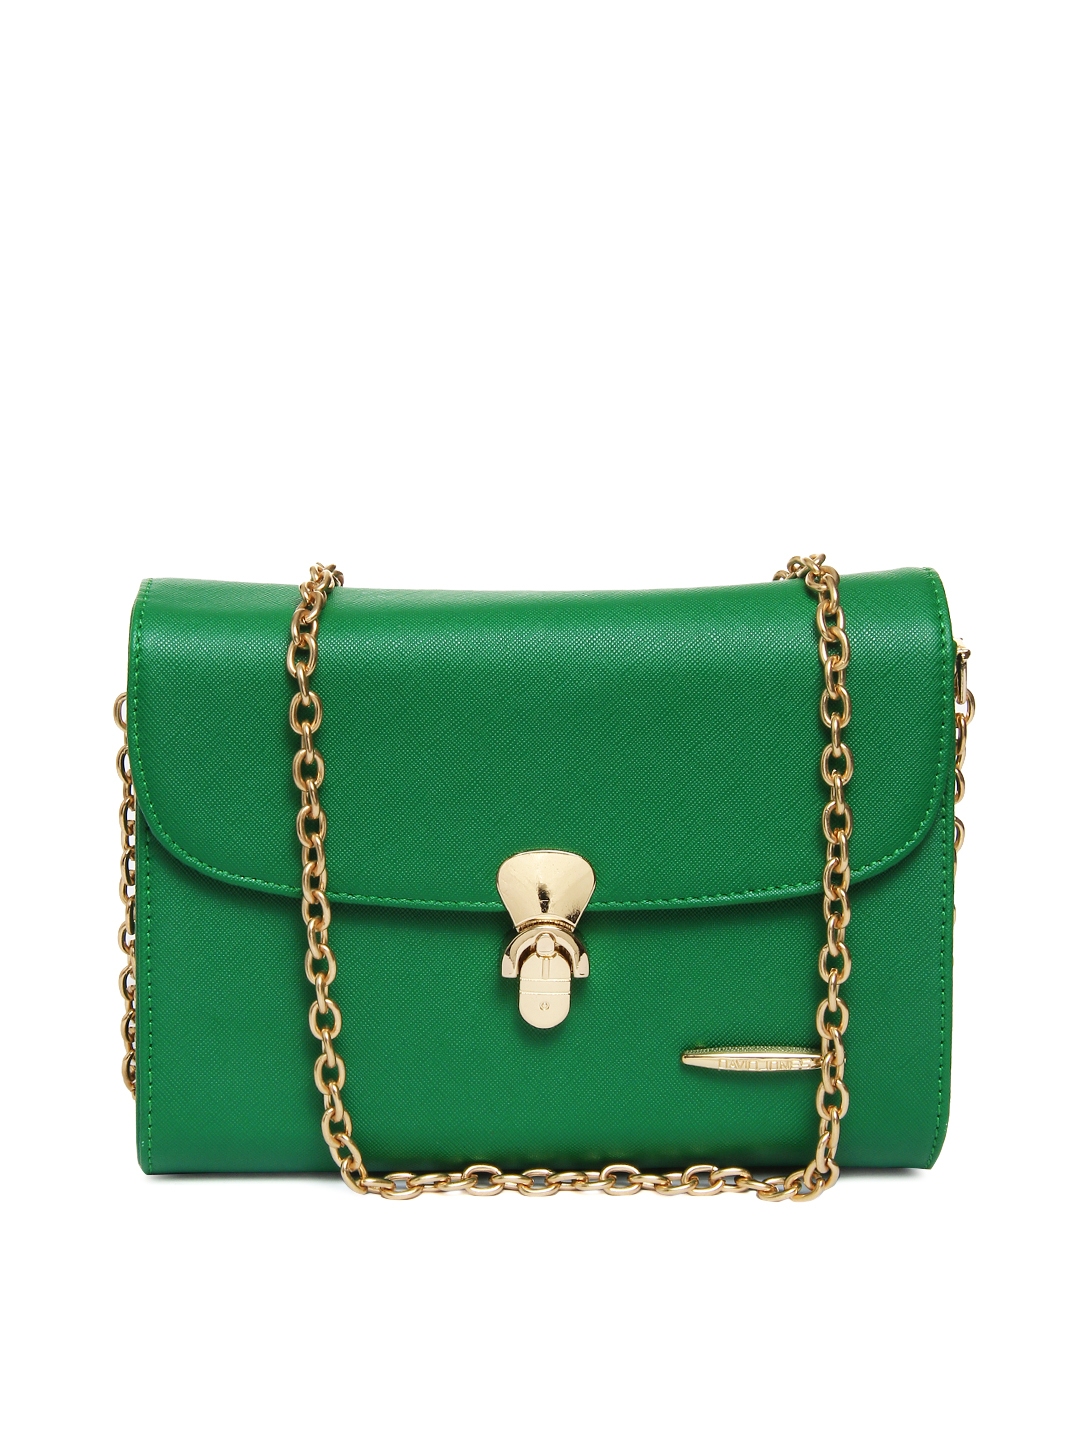 Buy David Jones Green Sling Bag - Handbags for Women 1621345 | Myntra